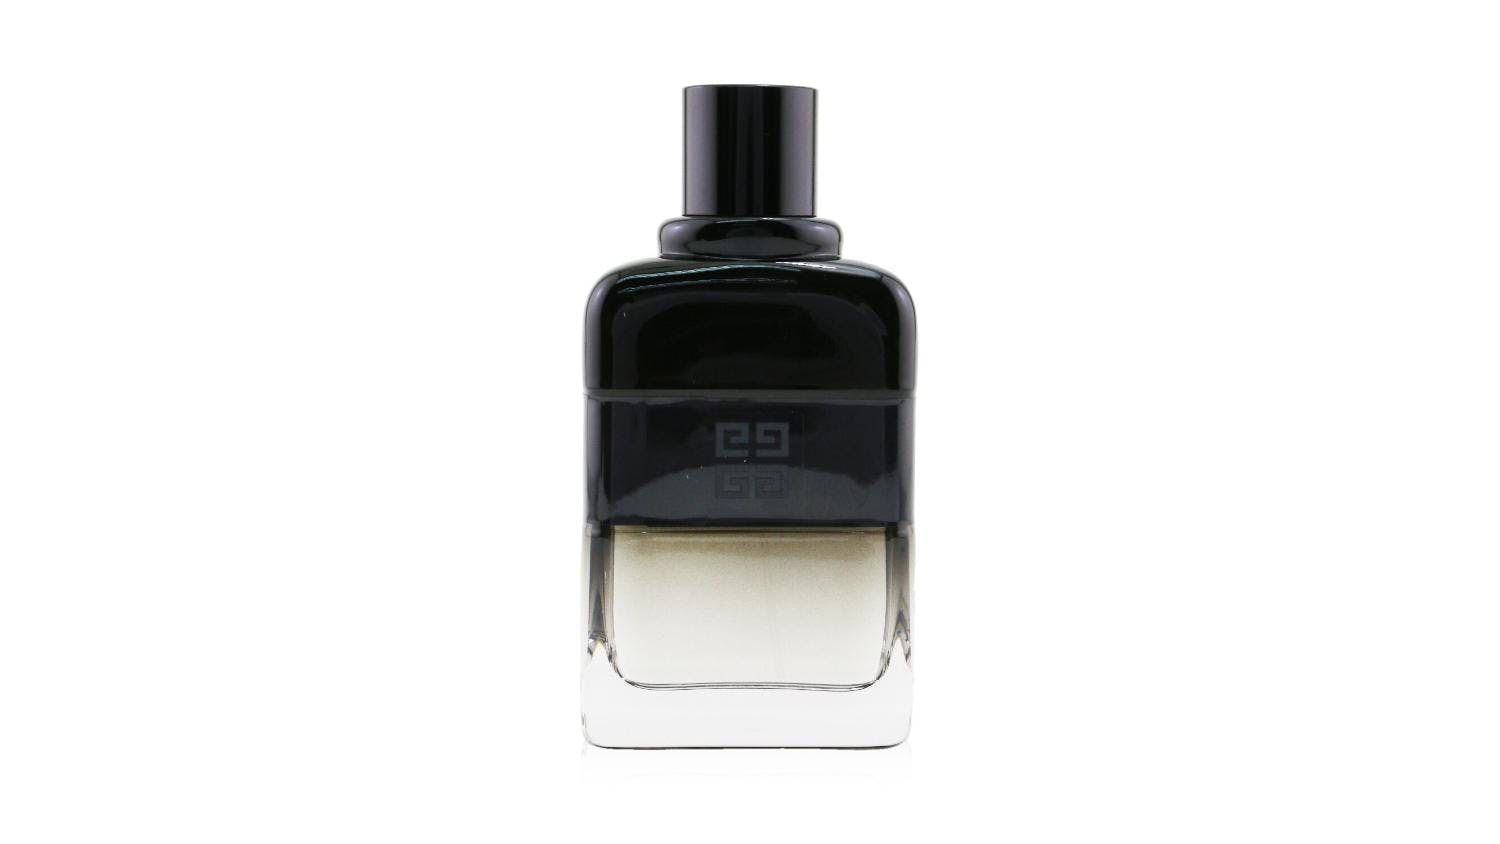 Givenchy Gentleman Eau De Parfum Boisee Spray - 100ml/3.3oz